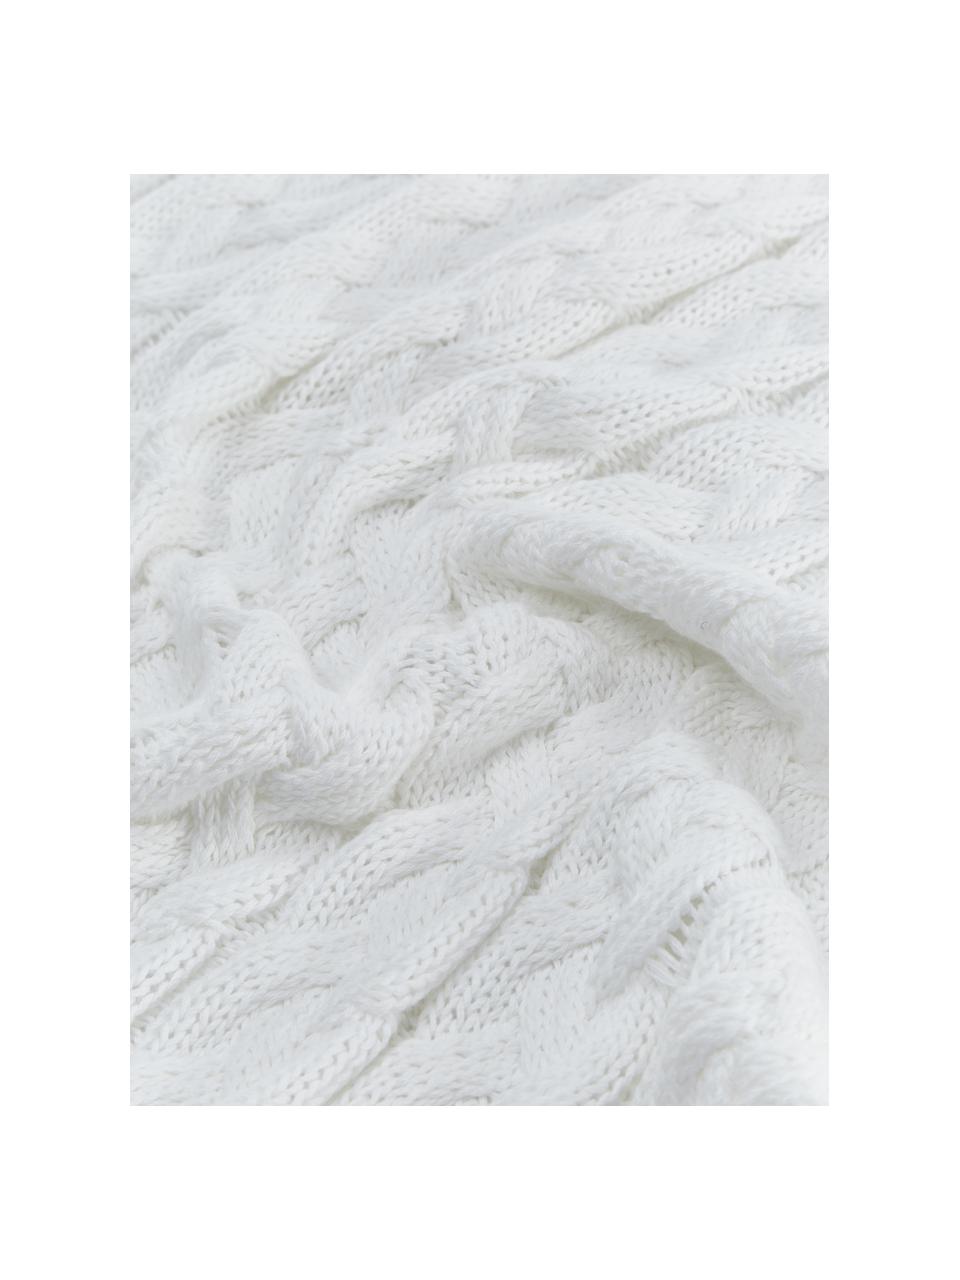 Plaid tricoté blanc Caleb, 100 % coton peigné, Blanc, larg. 130 x long. 170 cm